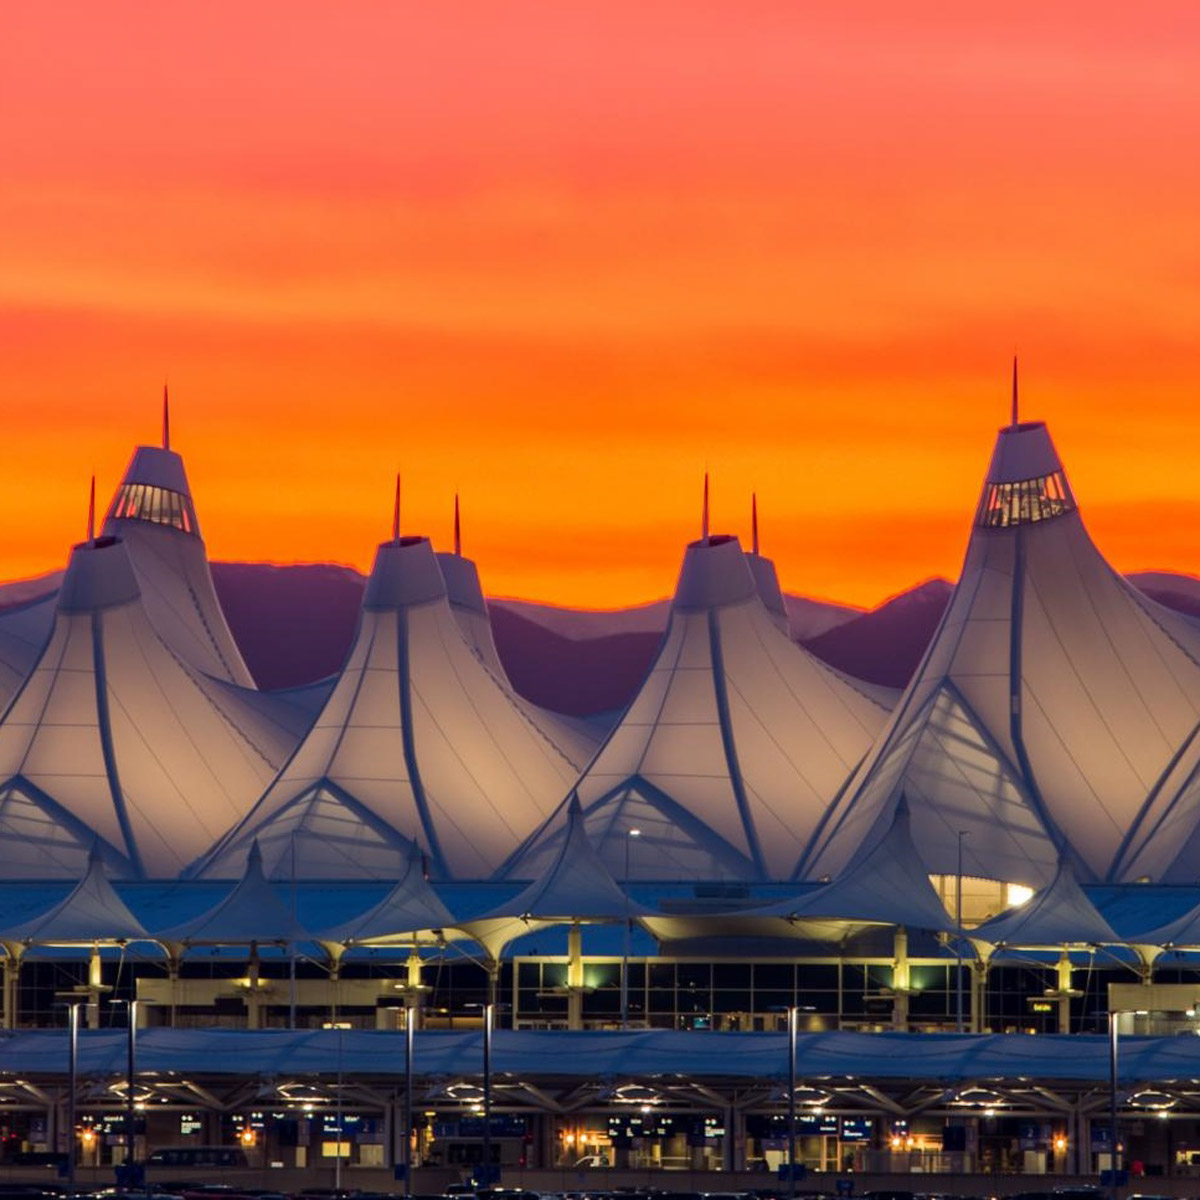 Denver International Airport – RAB Expansion Joints